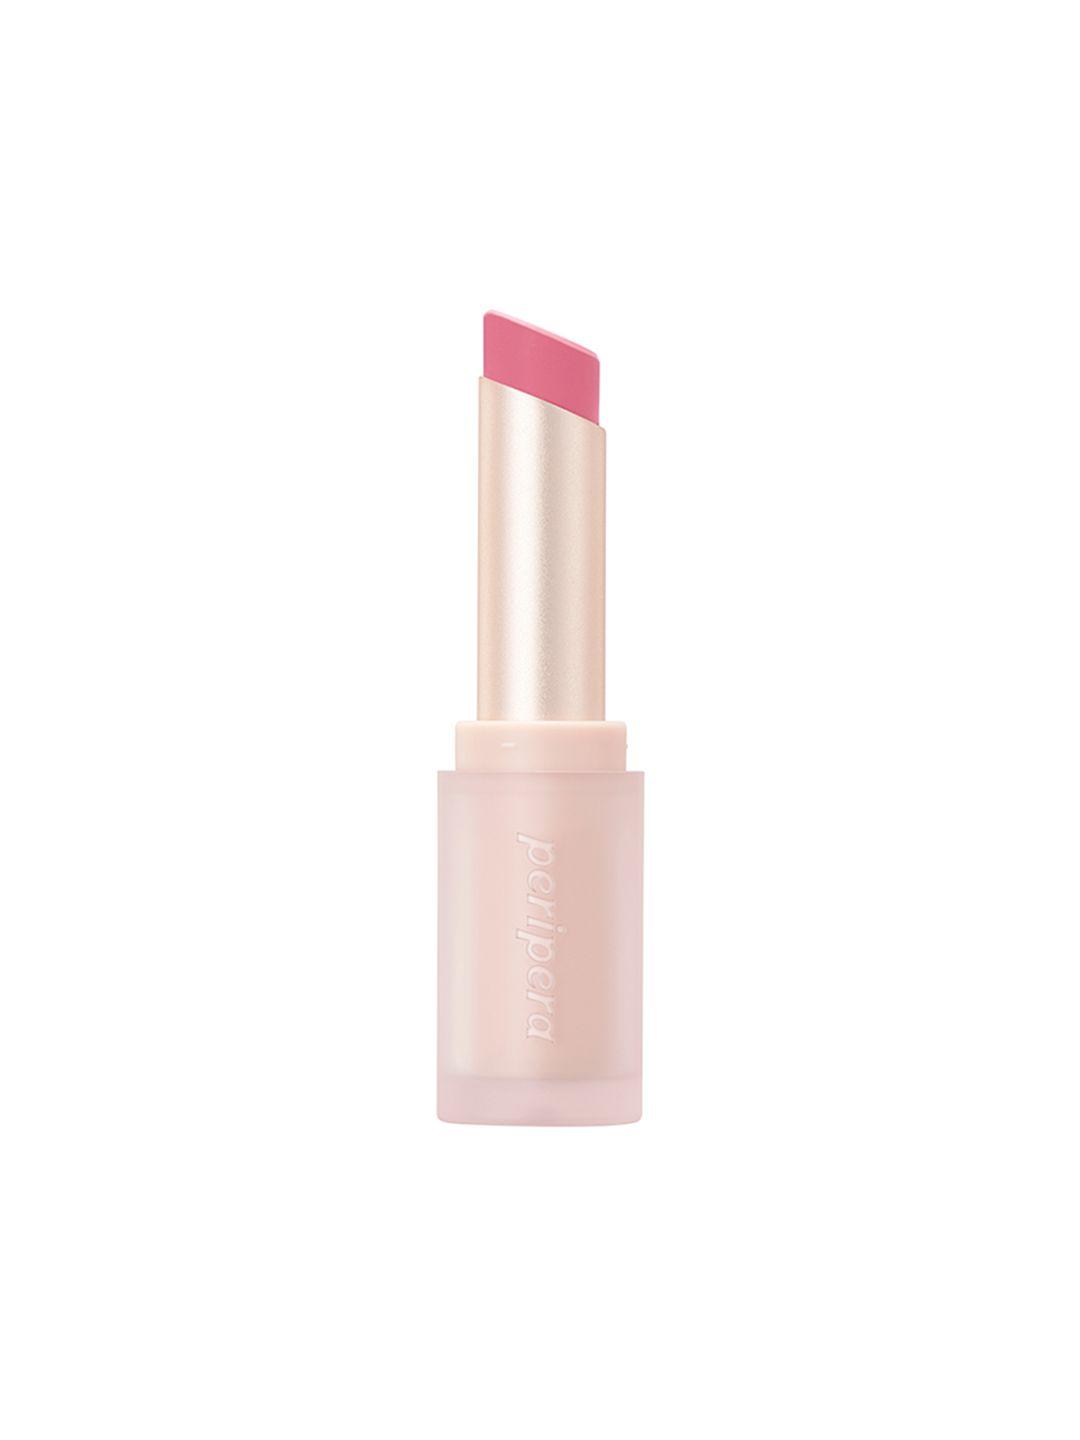 peripera ink mood matte lightweight lipstick - pink go up 02